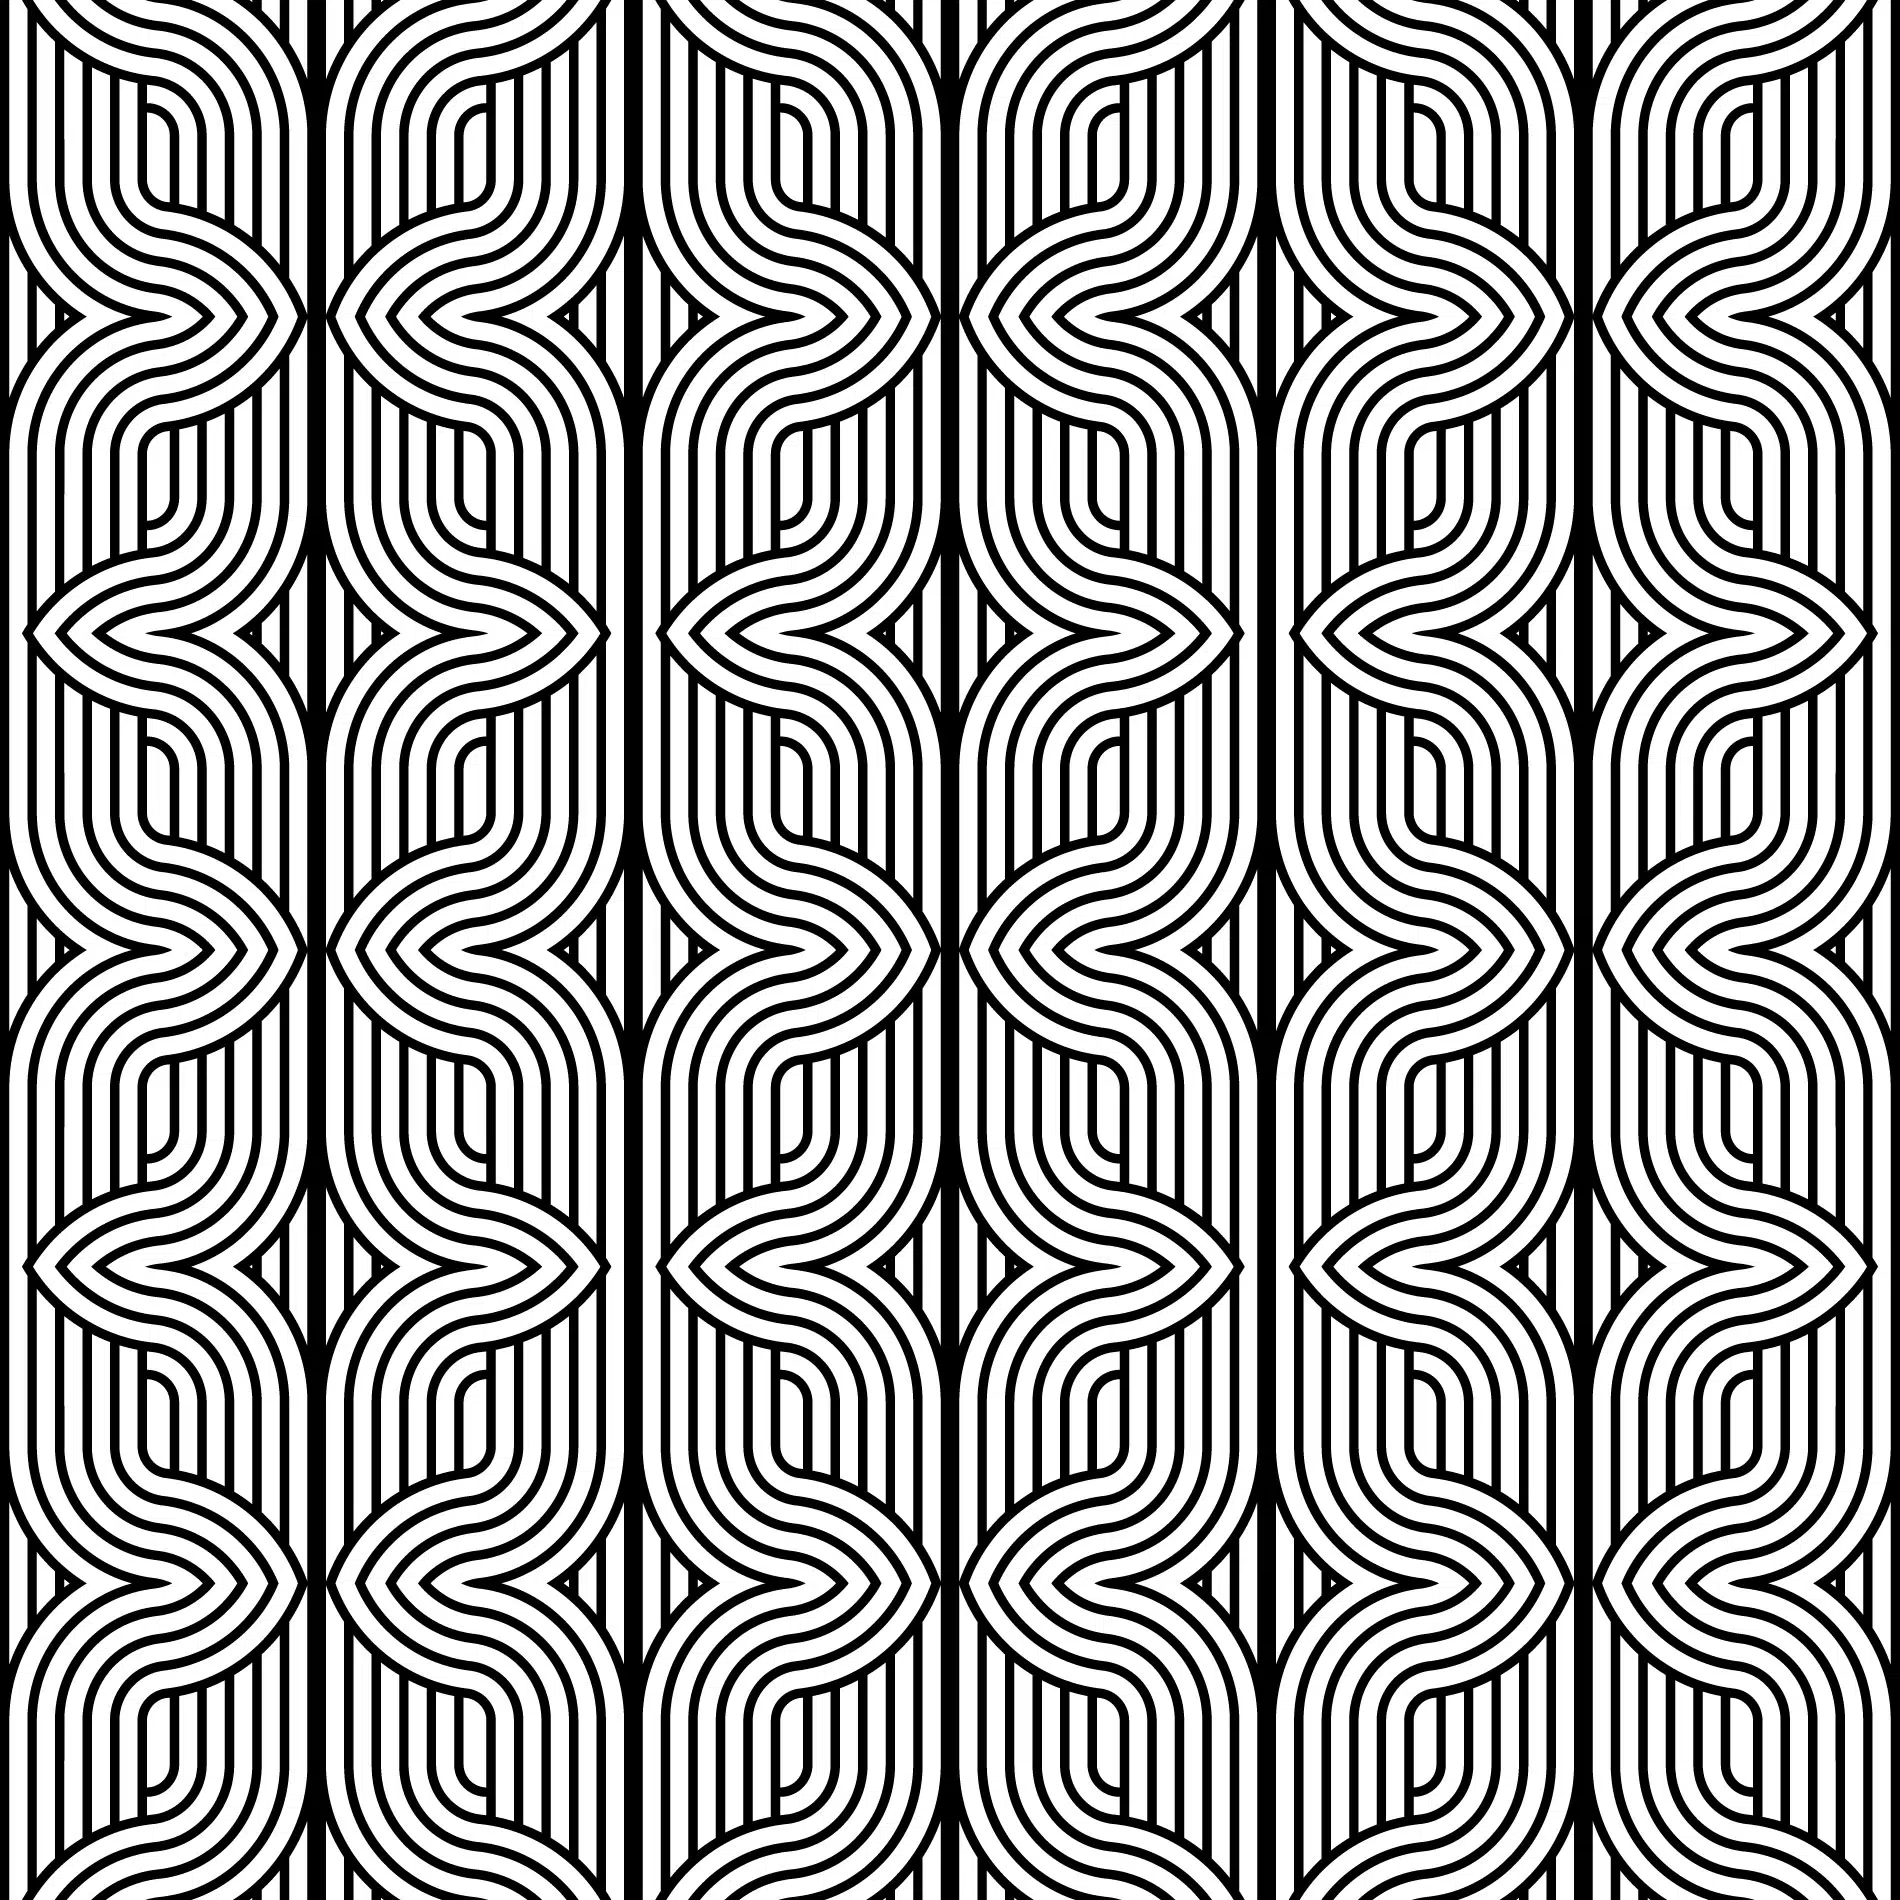 Art Deco Seamless Geometric Pattern. Elegant Wallpaper Design with